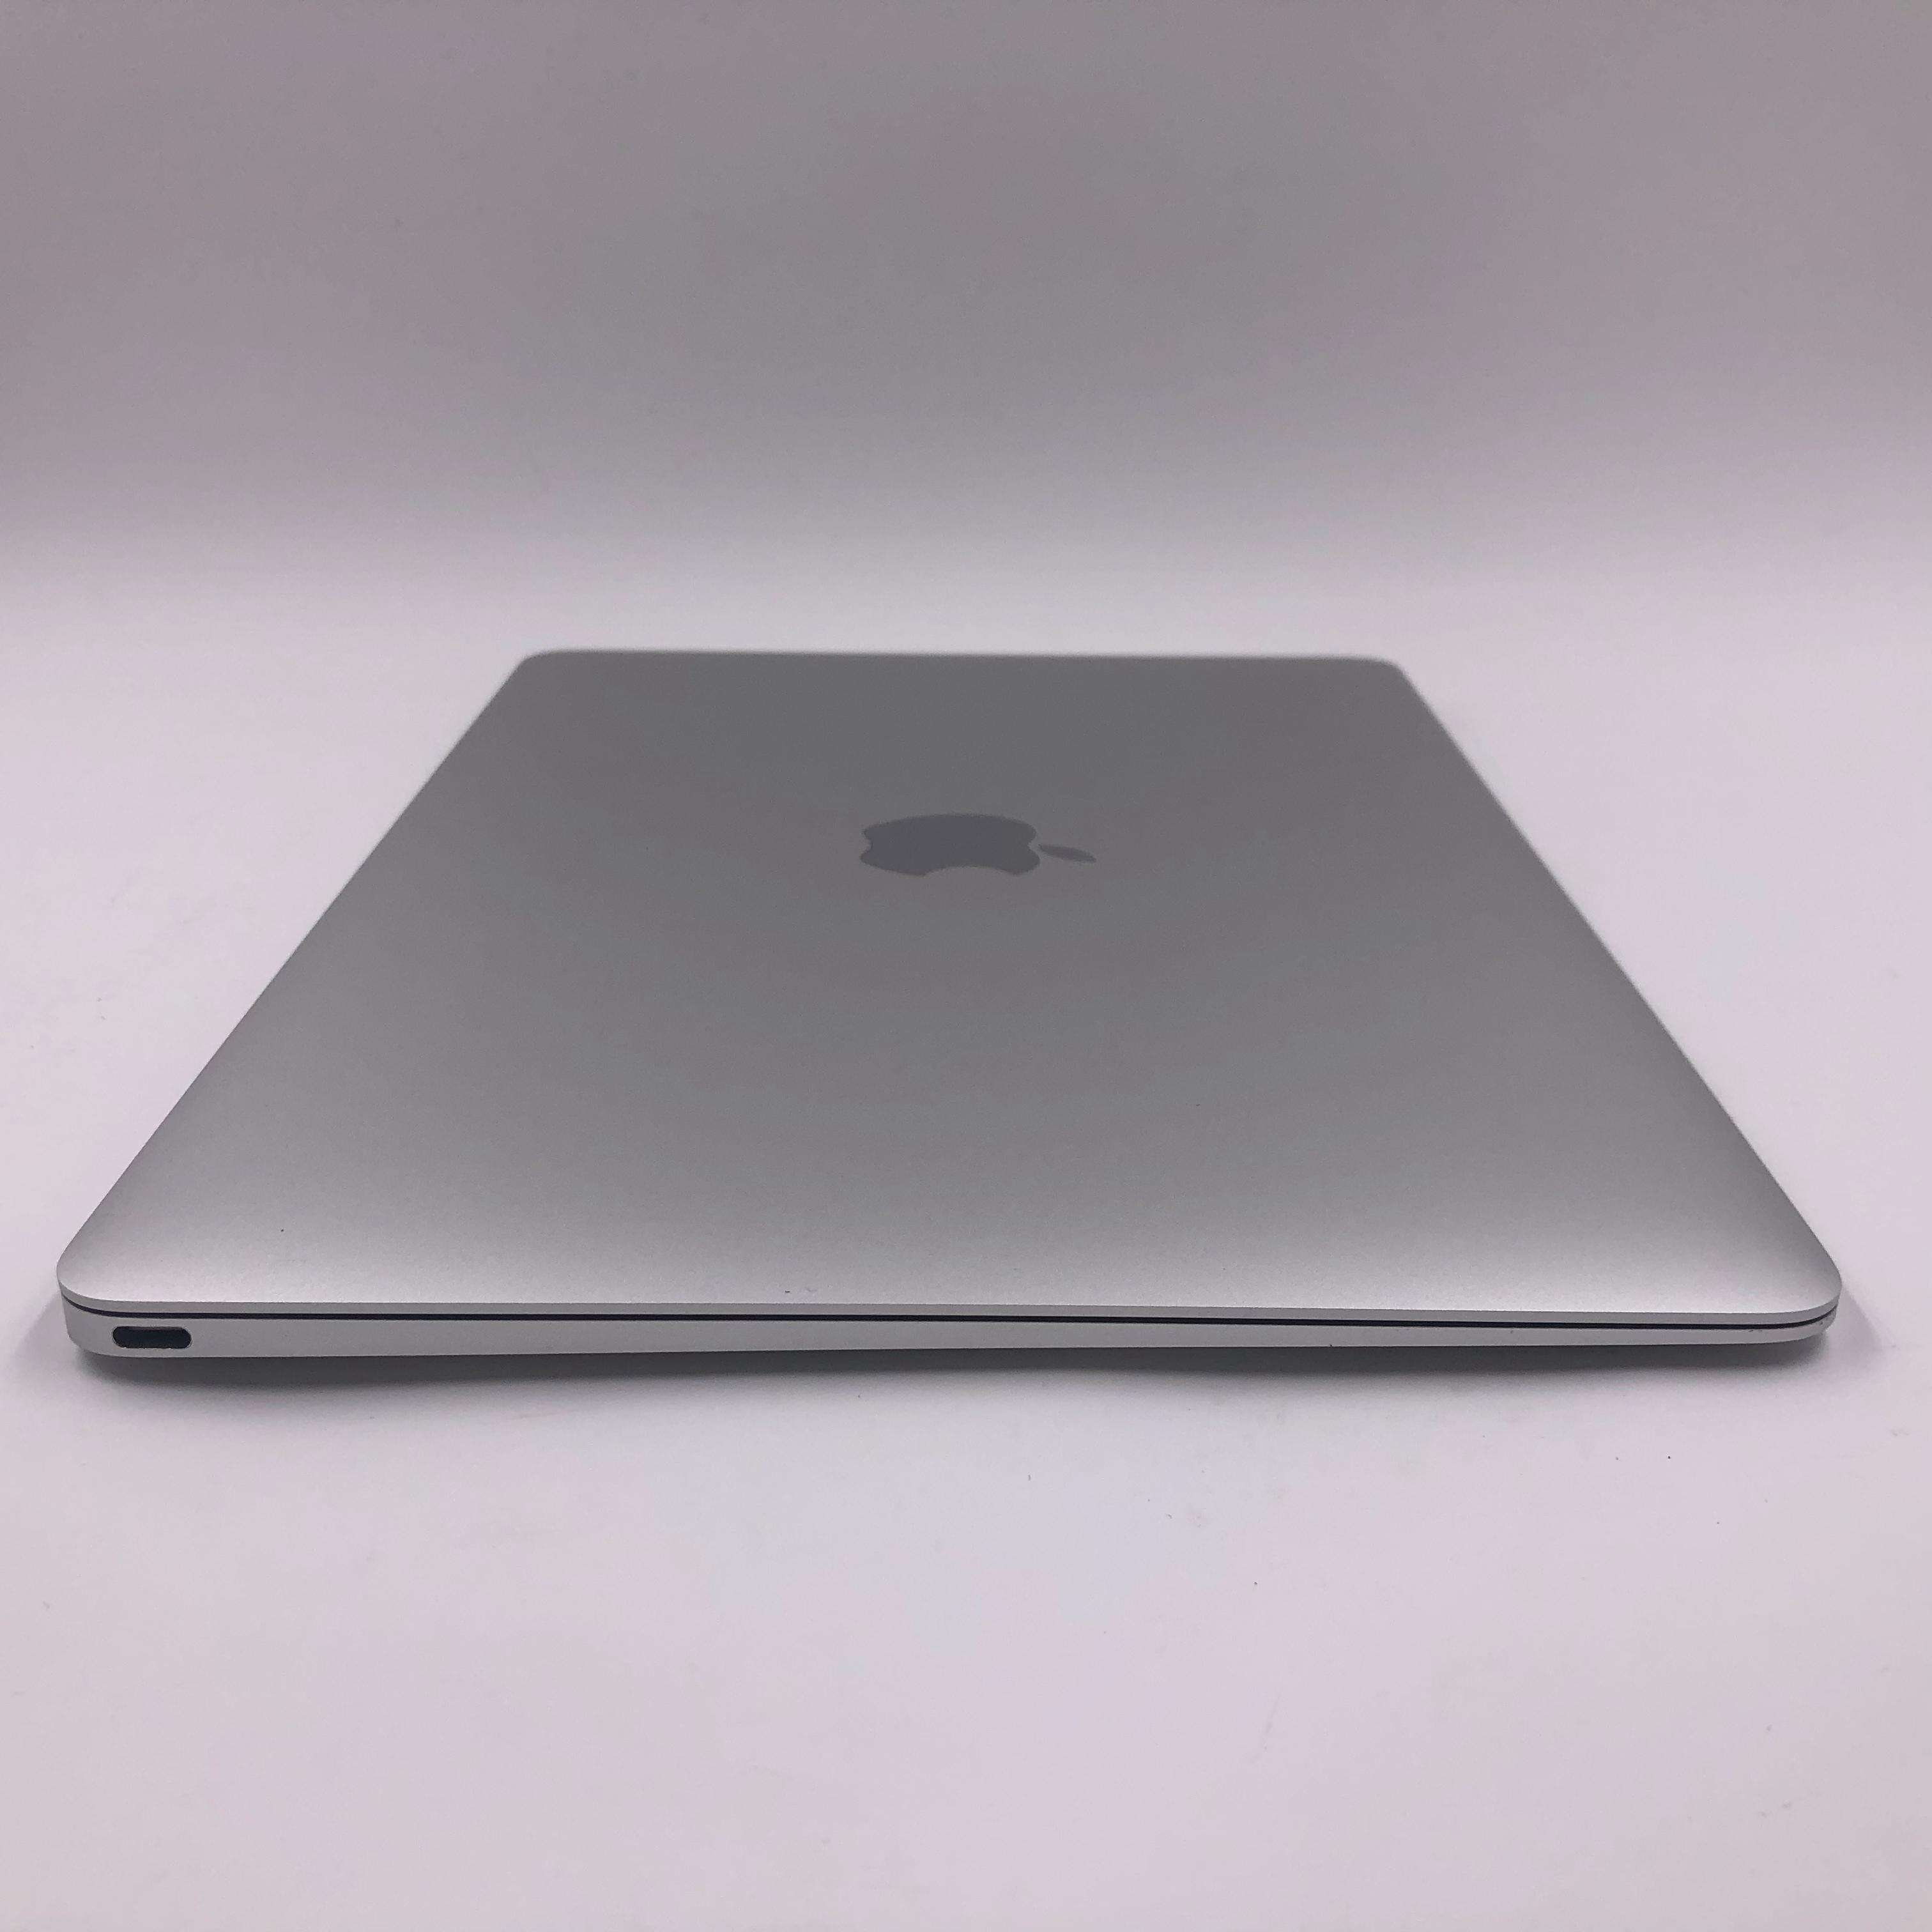 MacBook (12", 2016) CPU_1.1GHz Intel Core M/硬盘_256G 非国行